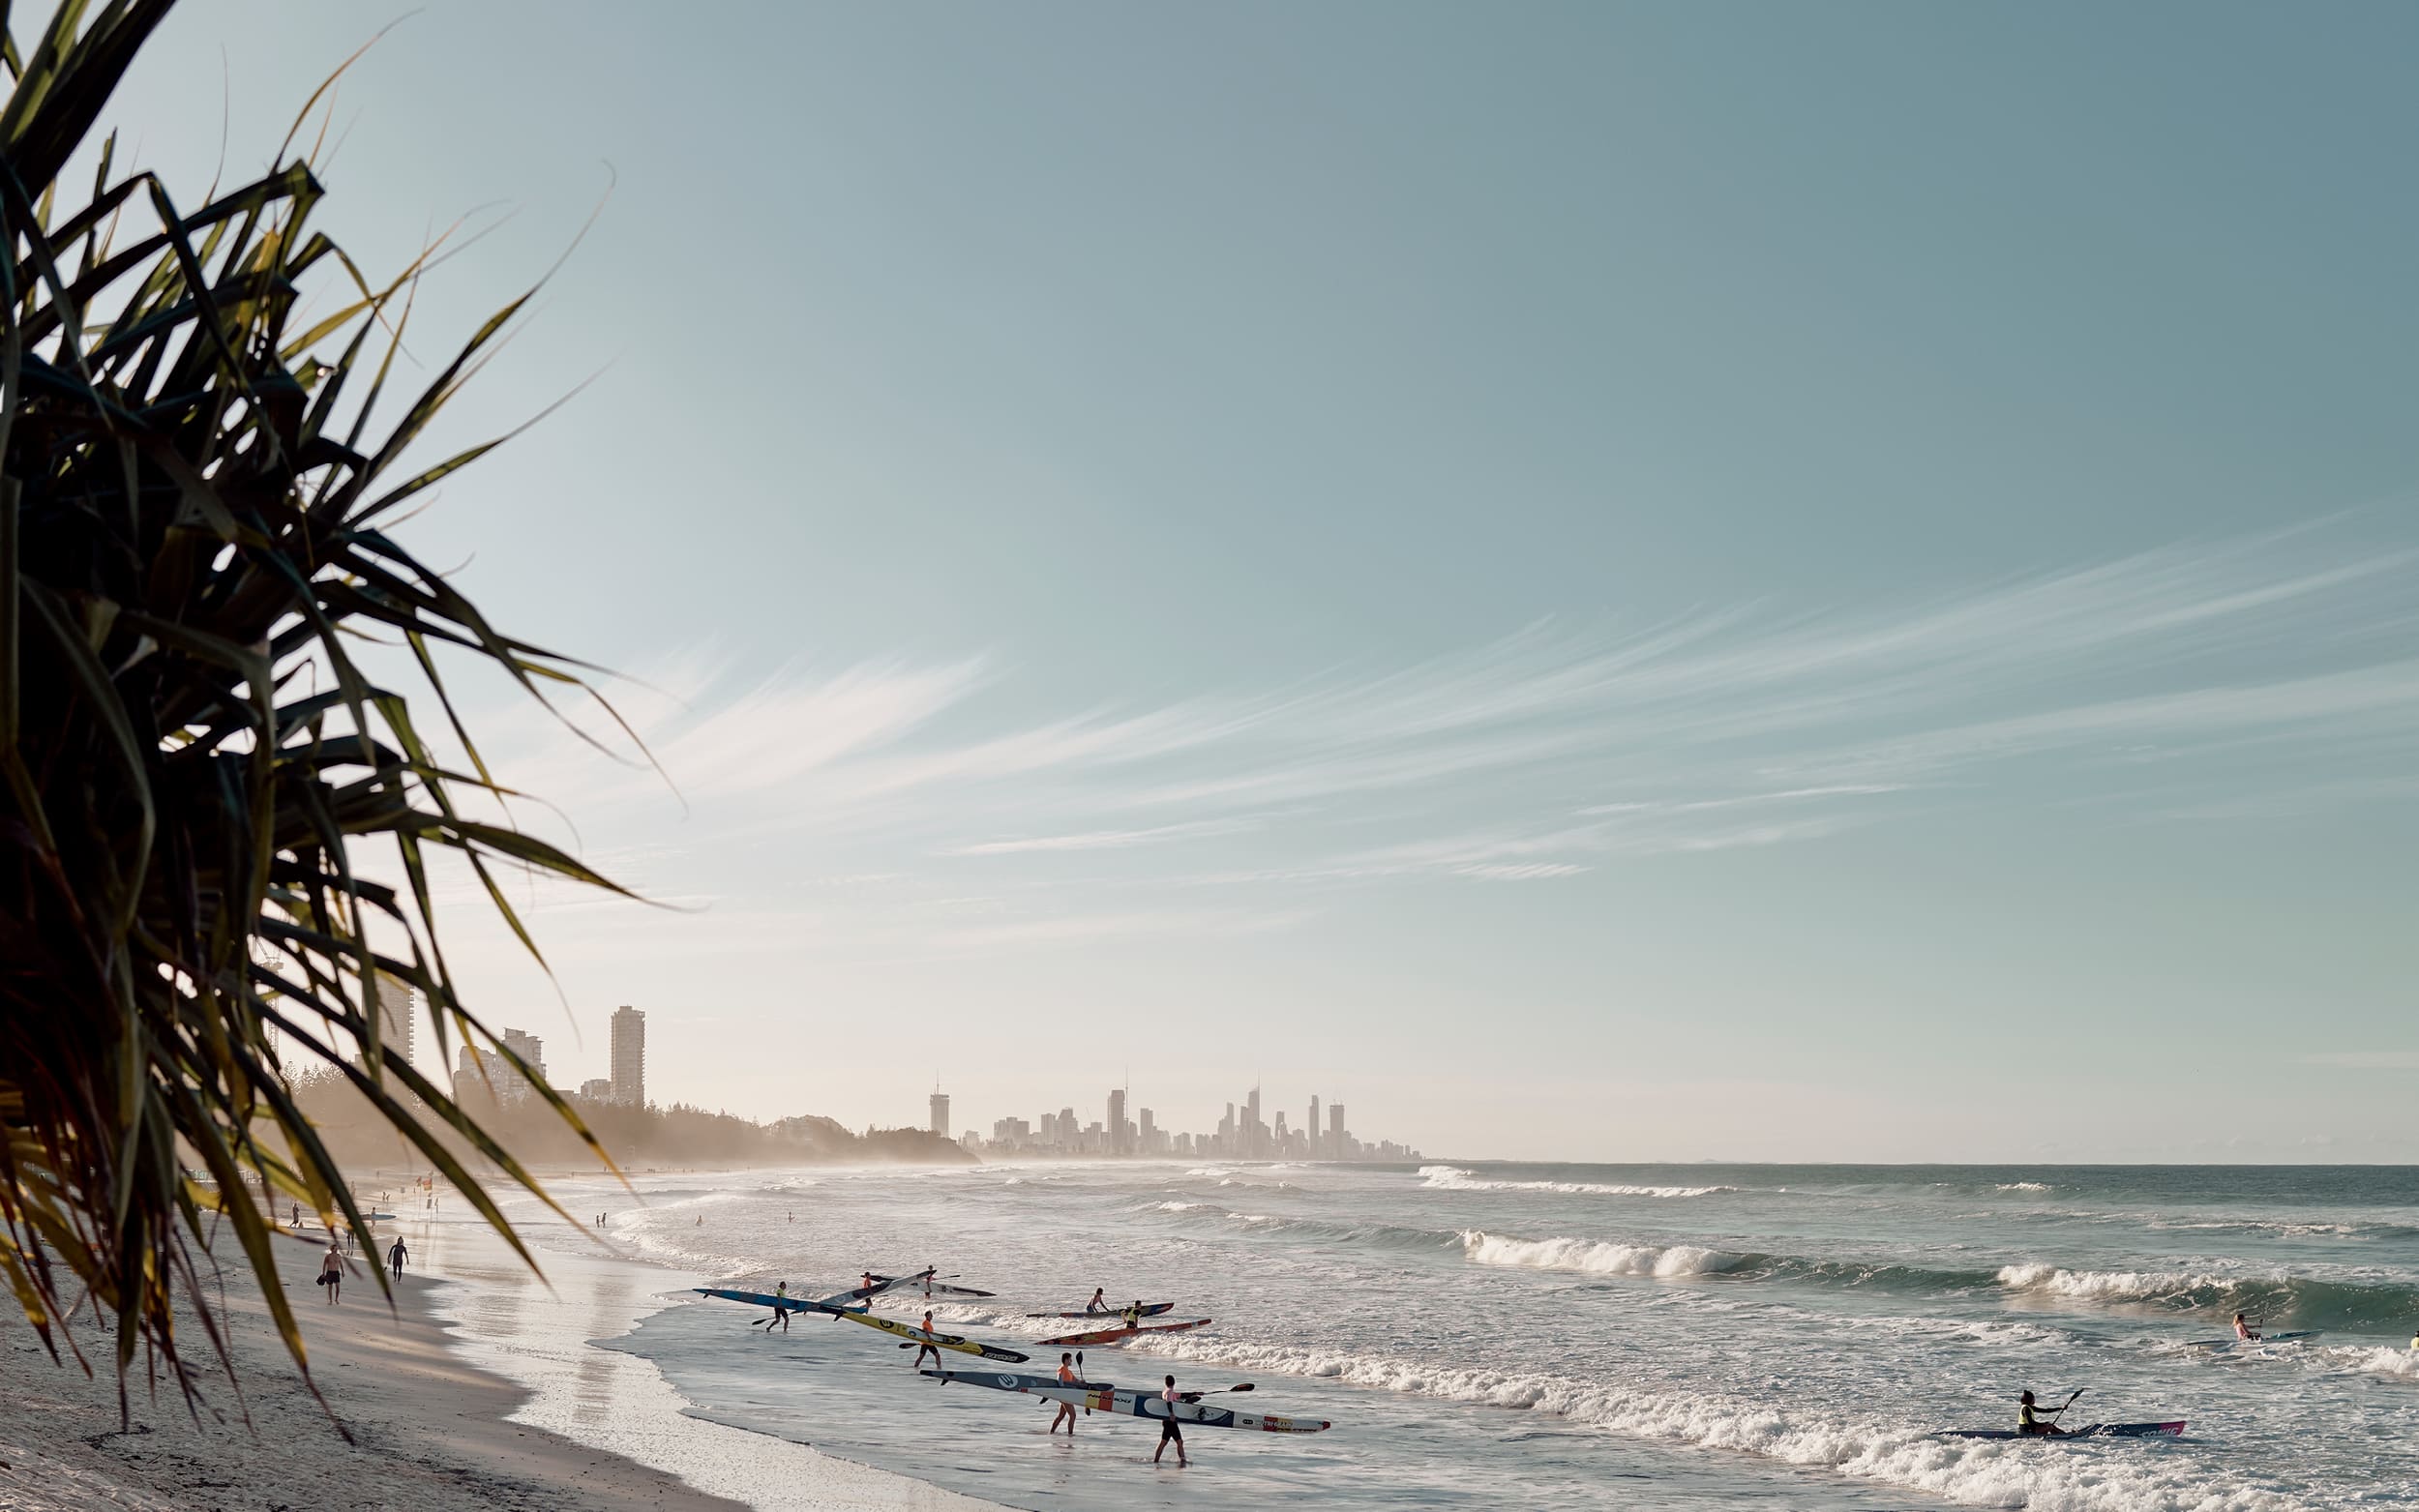 The Gold Coast coastline